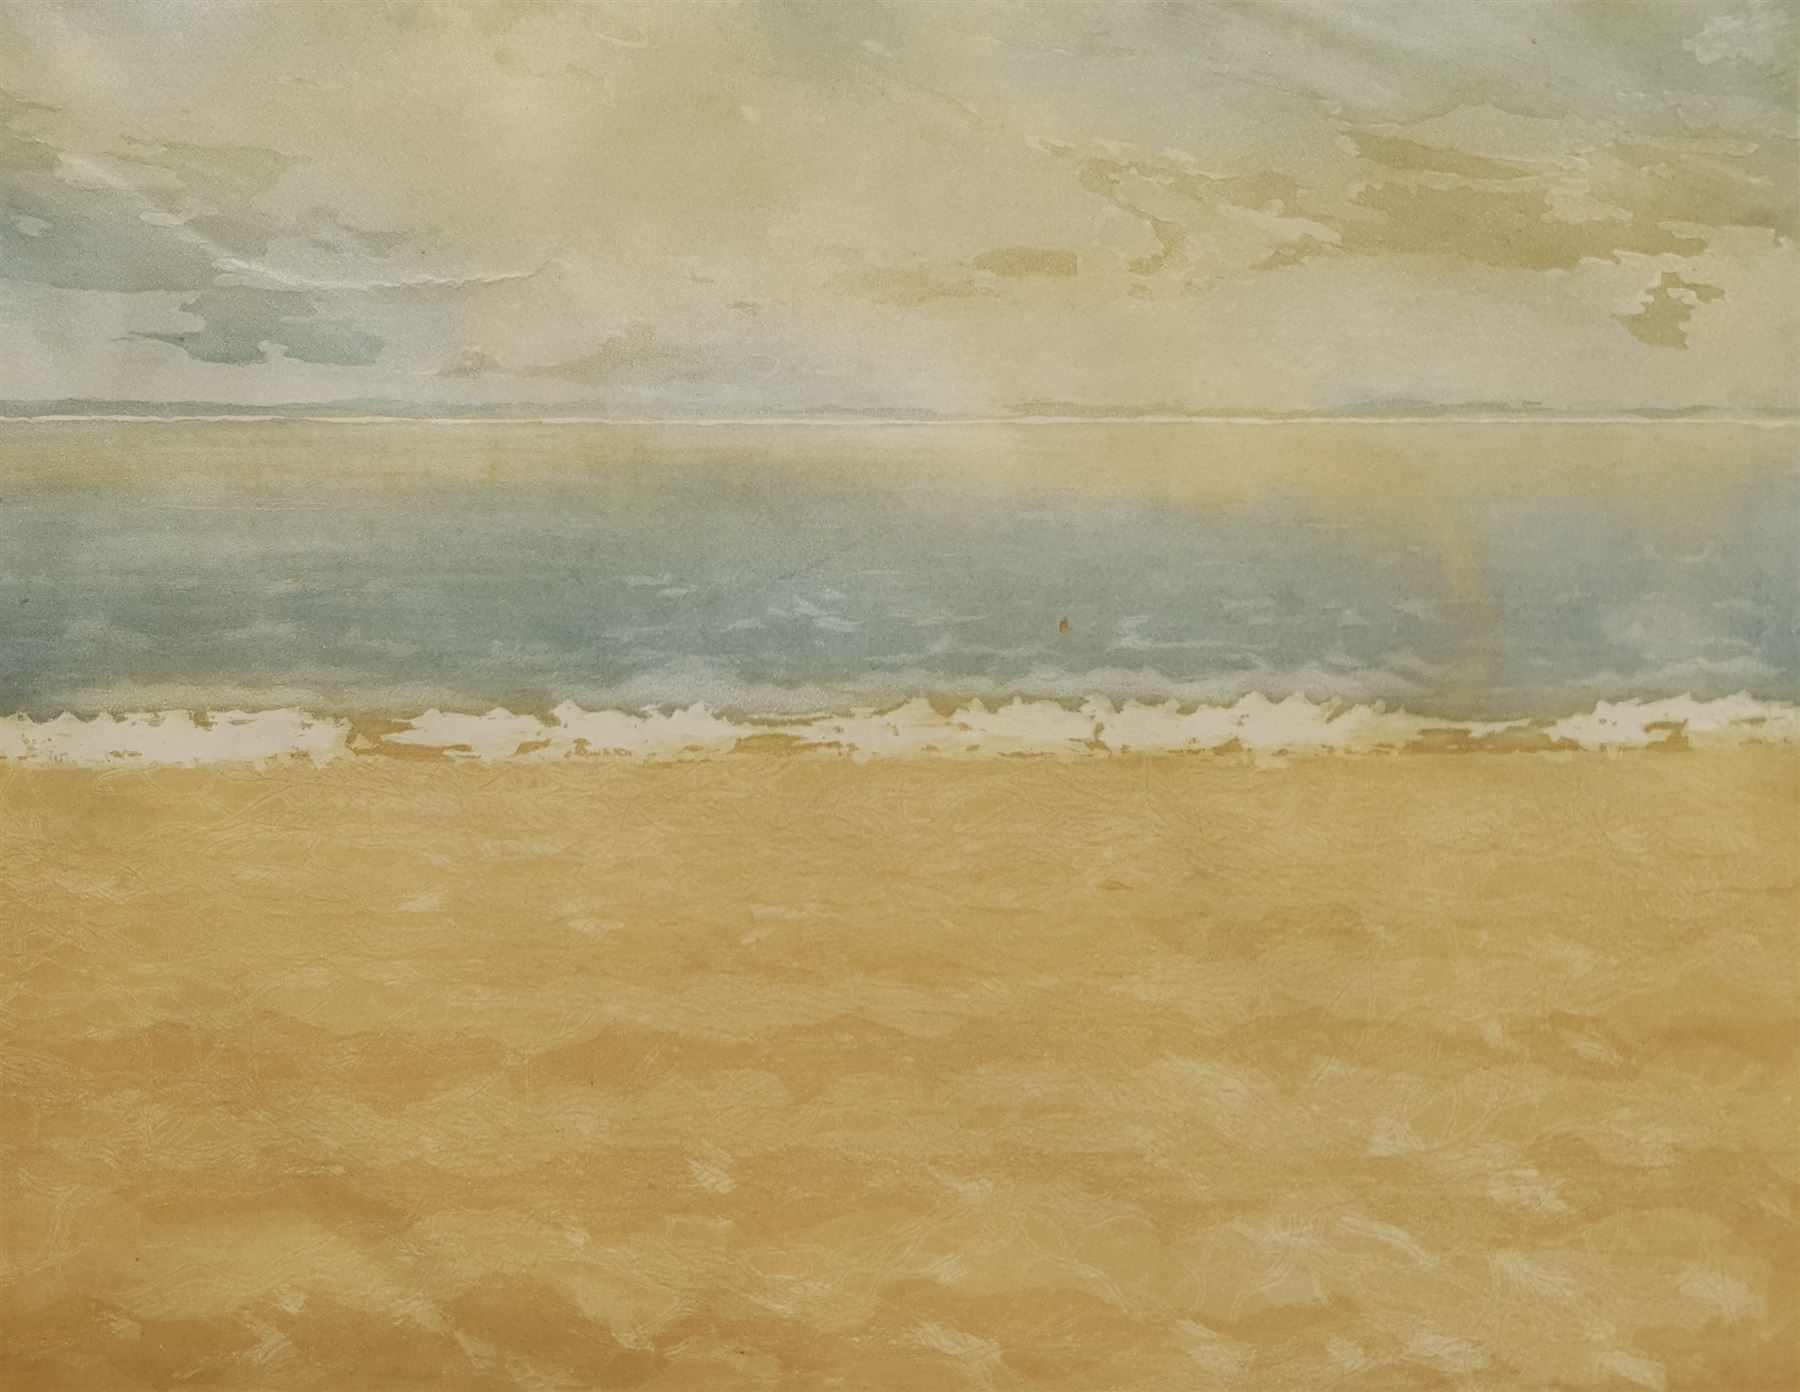 Attrib. Pompeo Mariani (Italian 1857-1927): Waves Breaking on the Shore